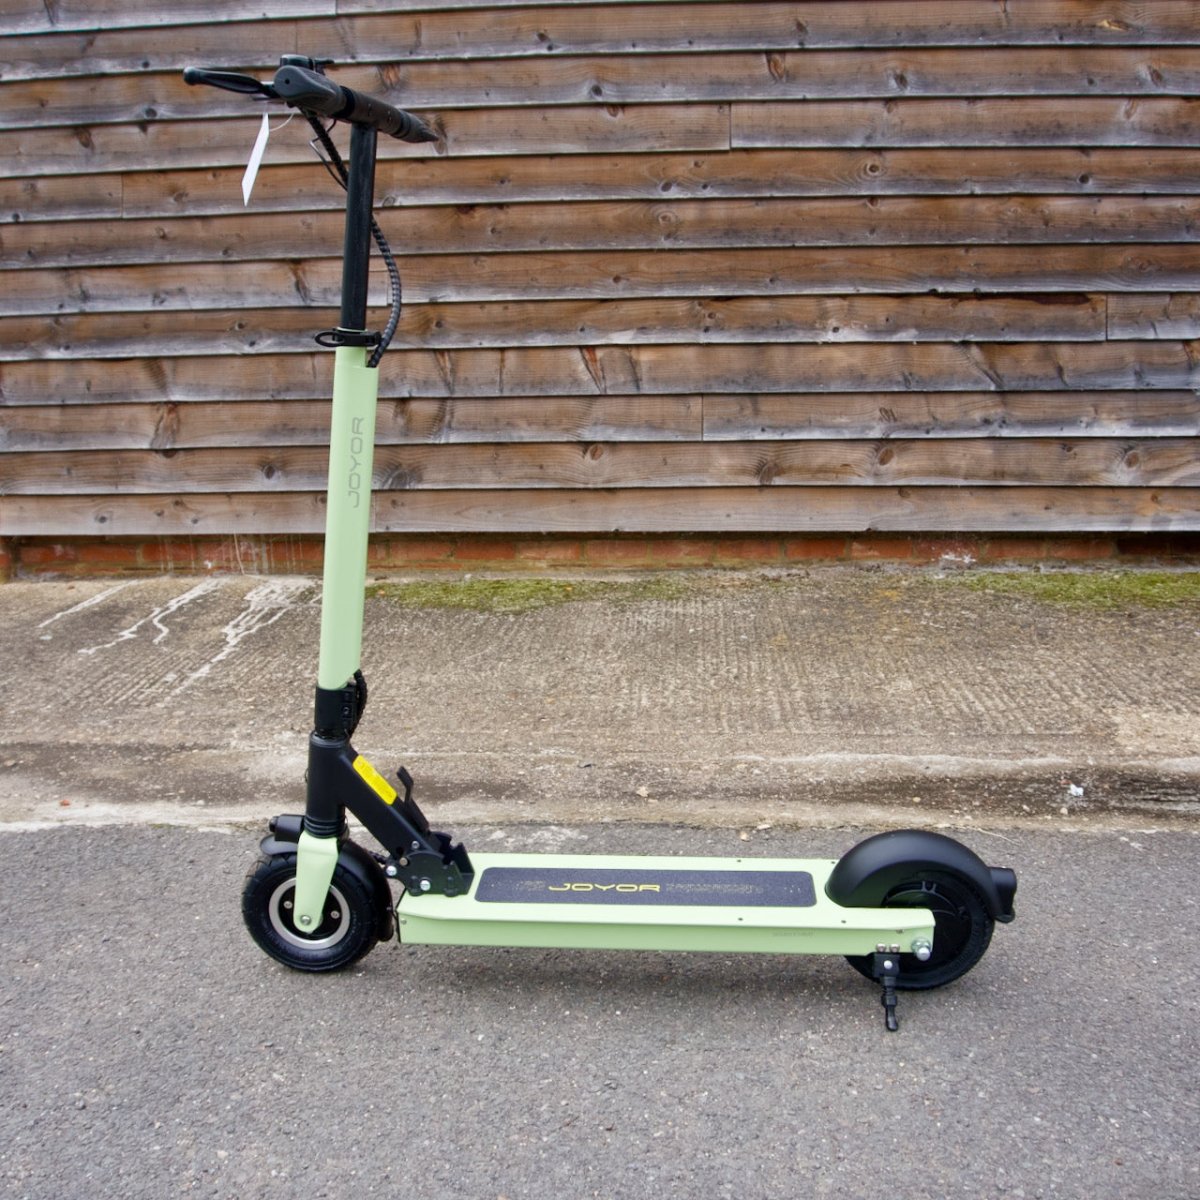 joyor f3 electric scooter green | horizon micromobility